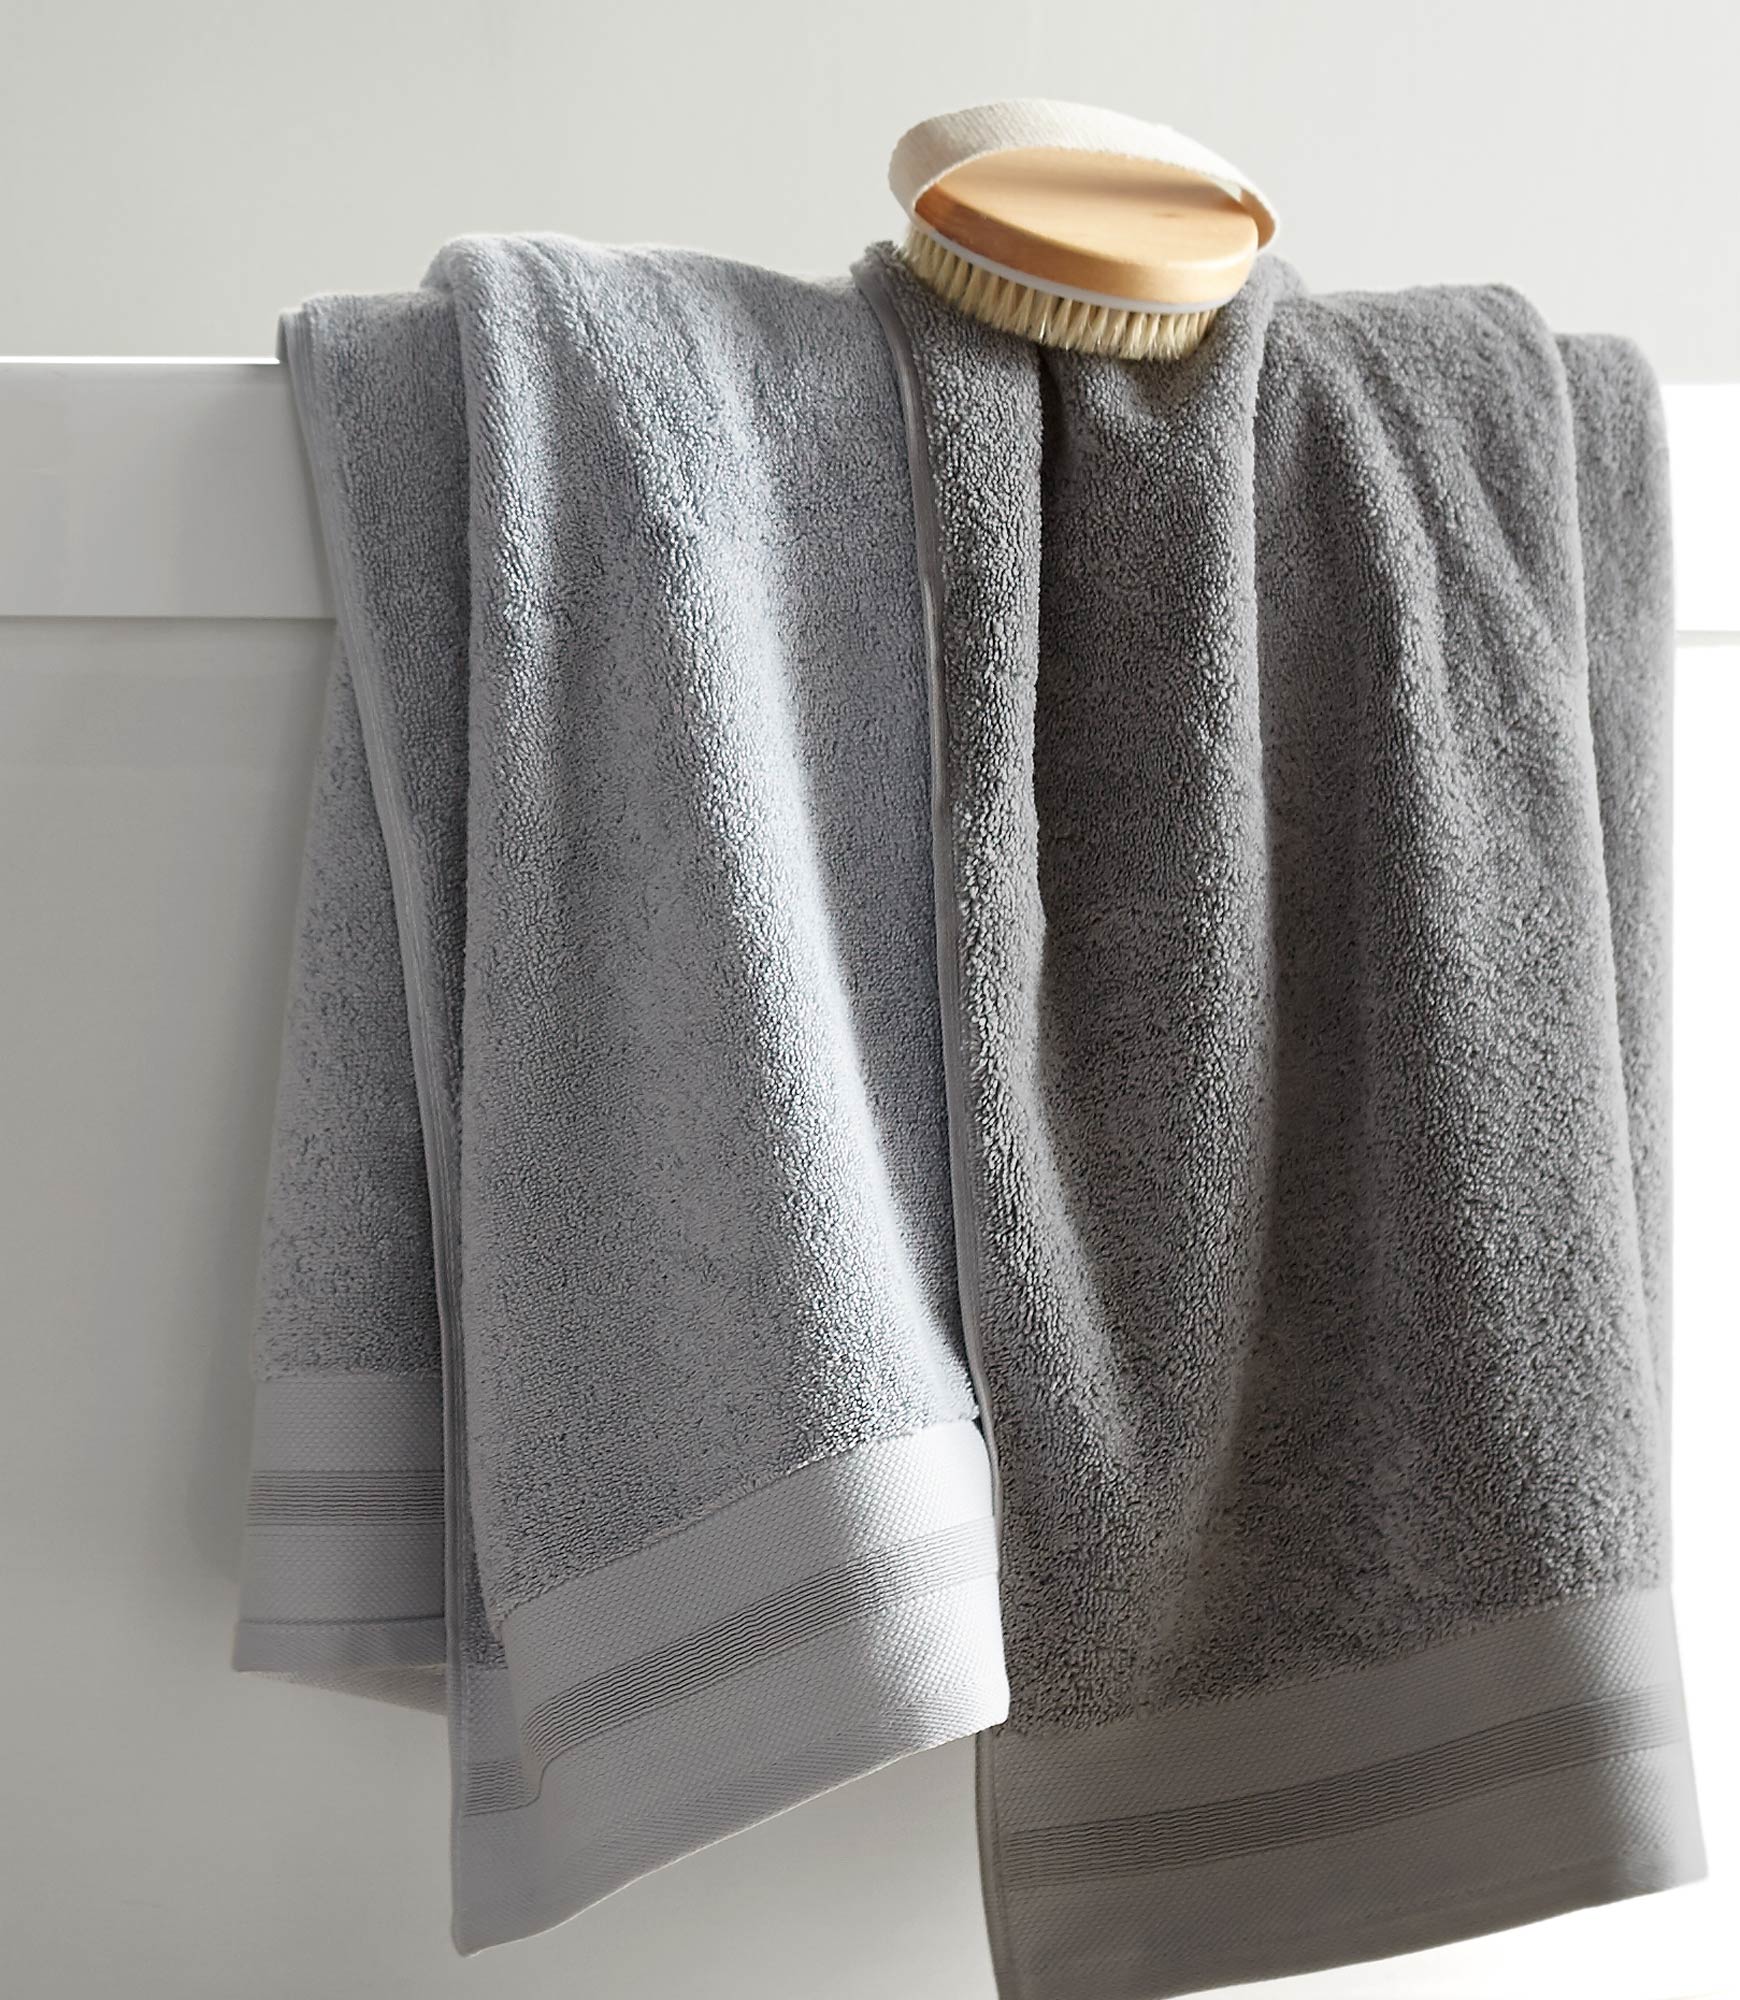 Coronado Bath Towels